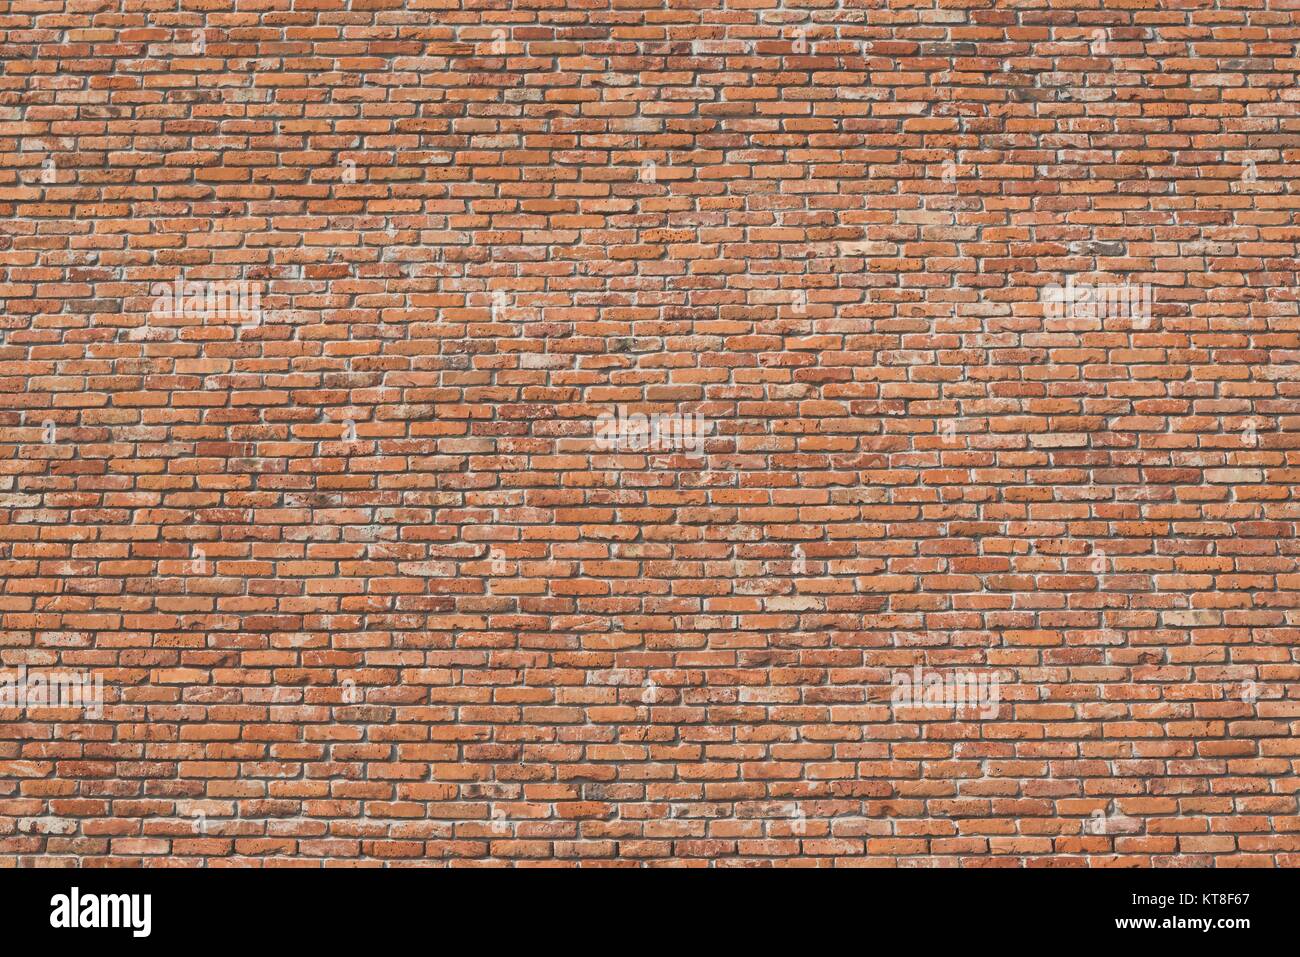 Red brick wall texture grunge background with matt film effect Stock Photo